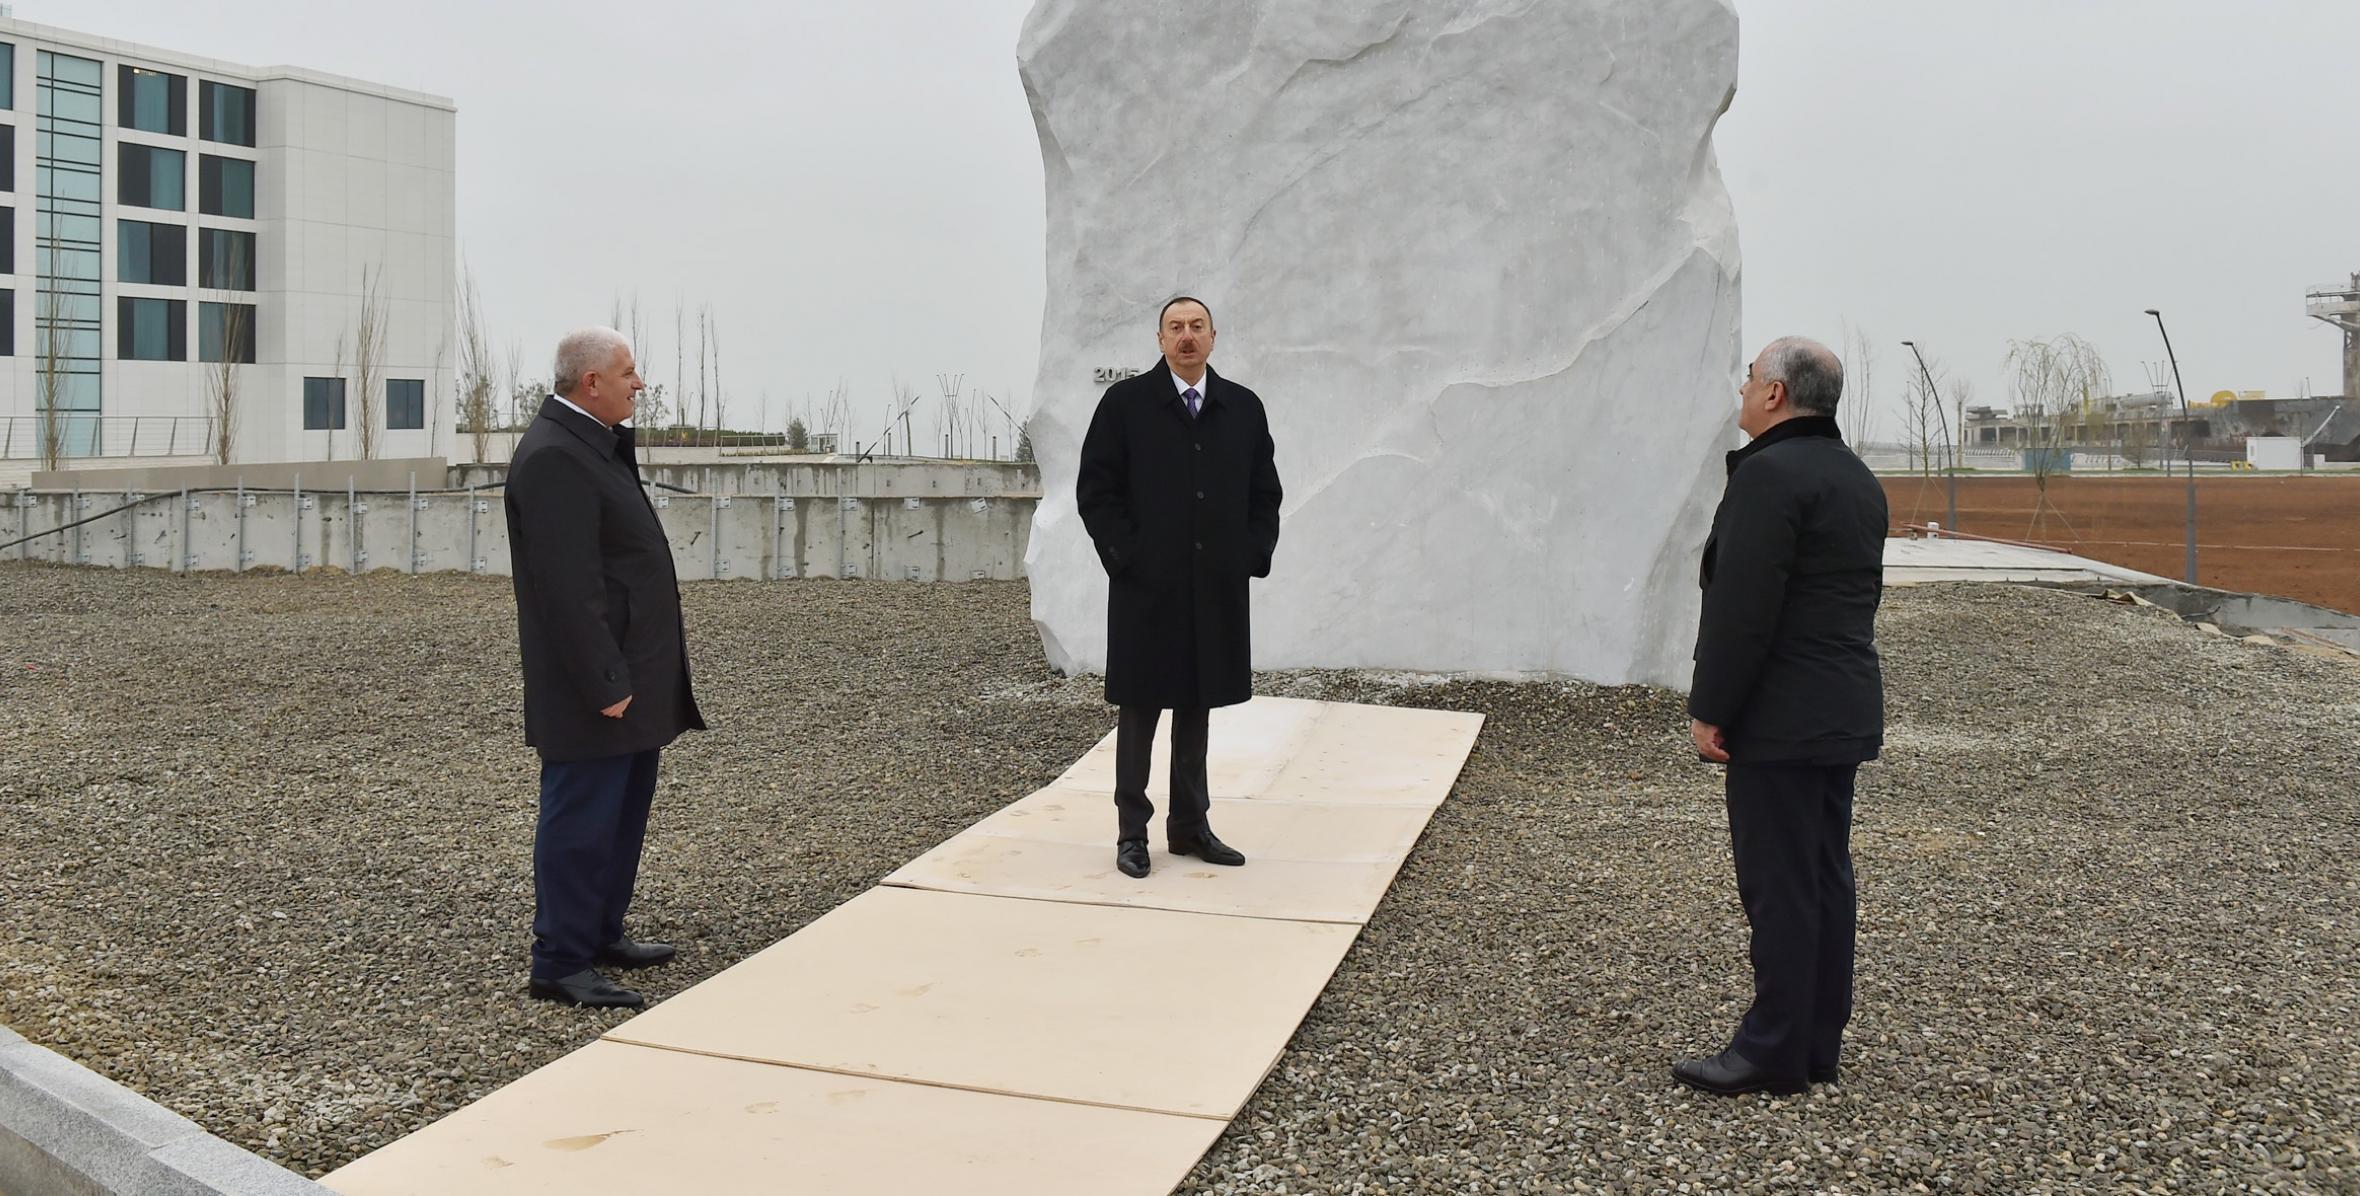 Ilham Aliyev reviewed the progress of construction at the Baku White City boulevard